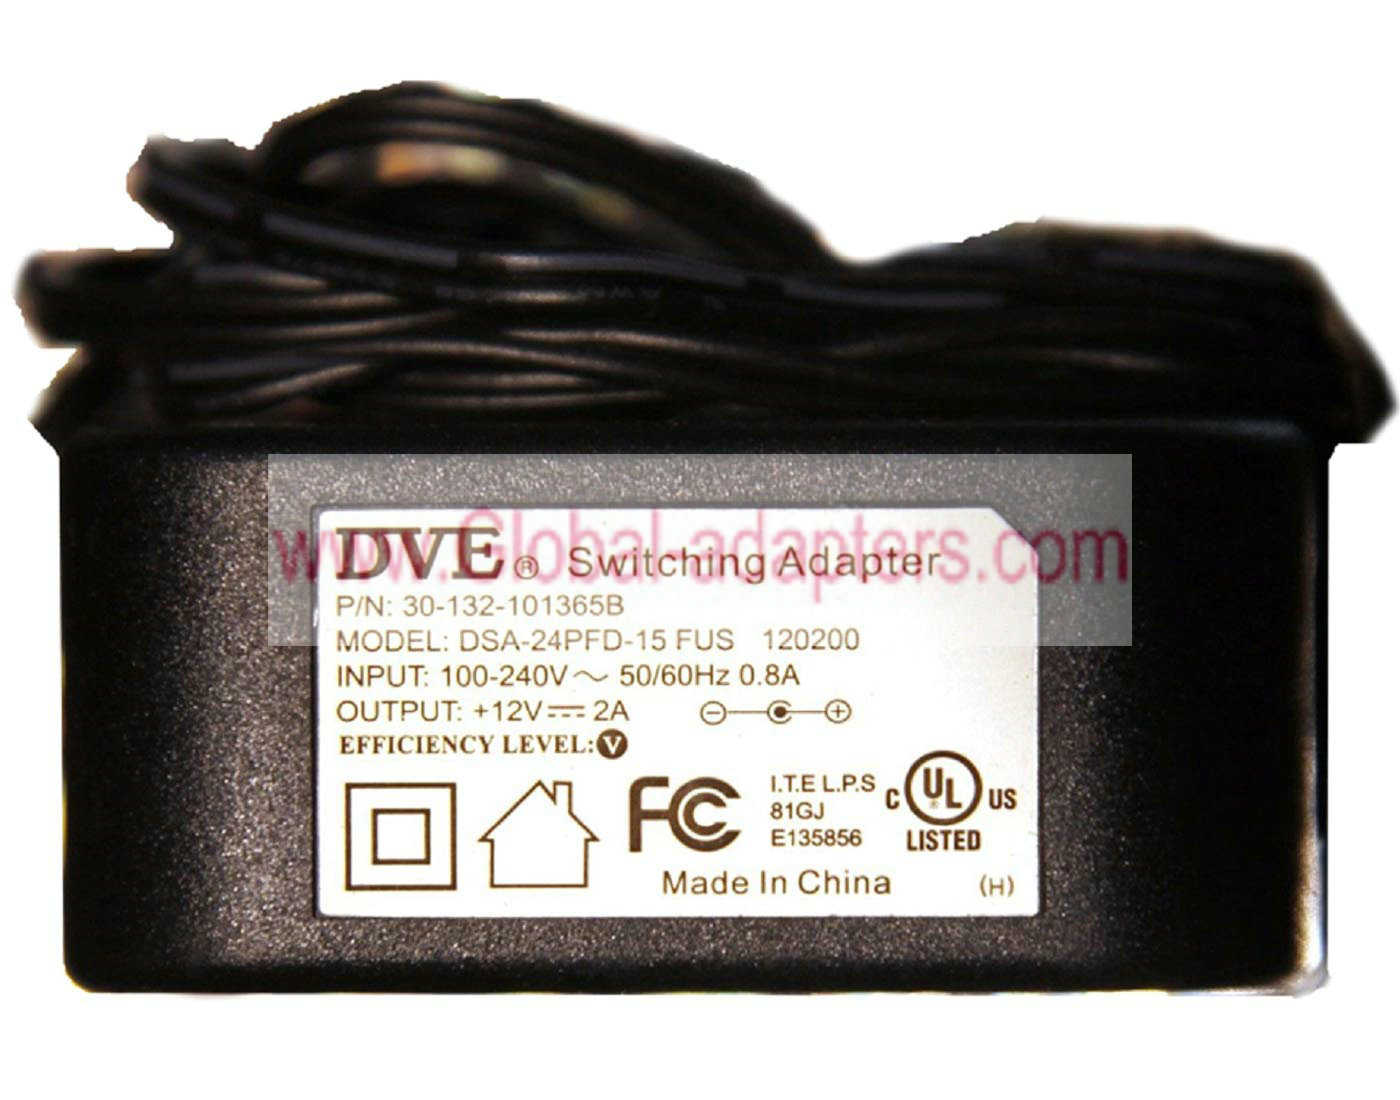 Brand New DVE 12V 2A DSA-24PFD-15 FUS 120200 AC adapter 30-132-101365B power supply 5.5*2.1mm - Click Image to Close